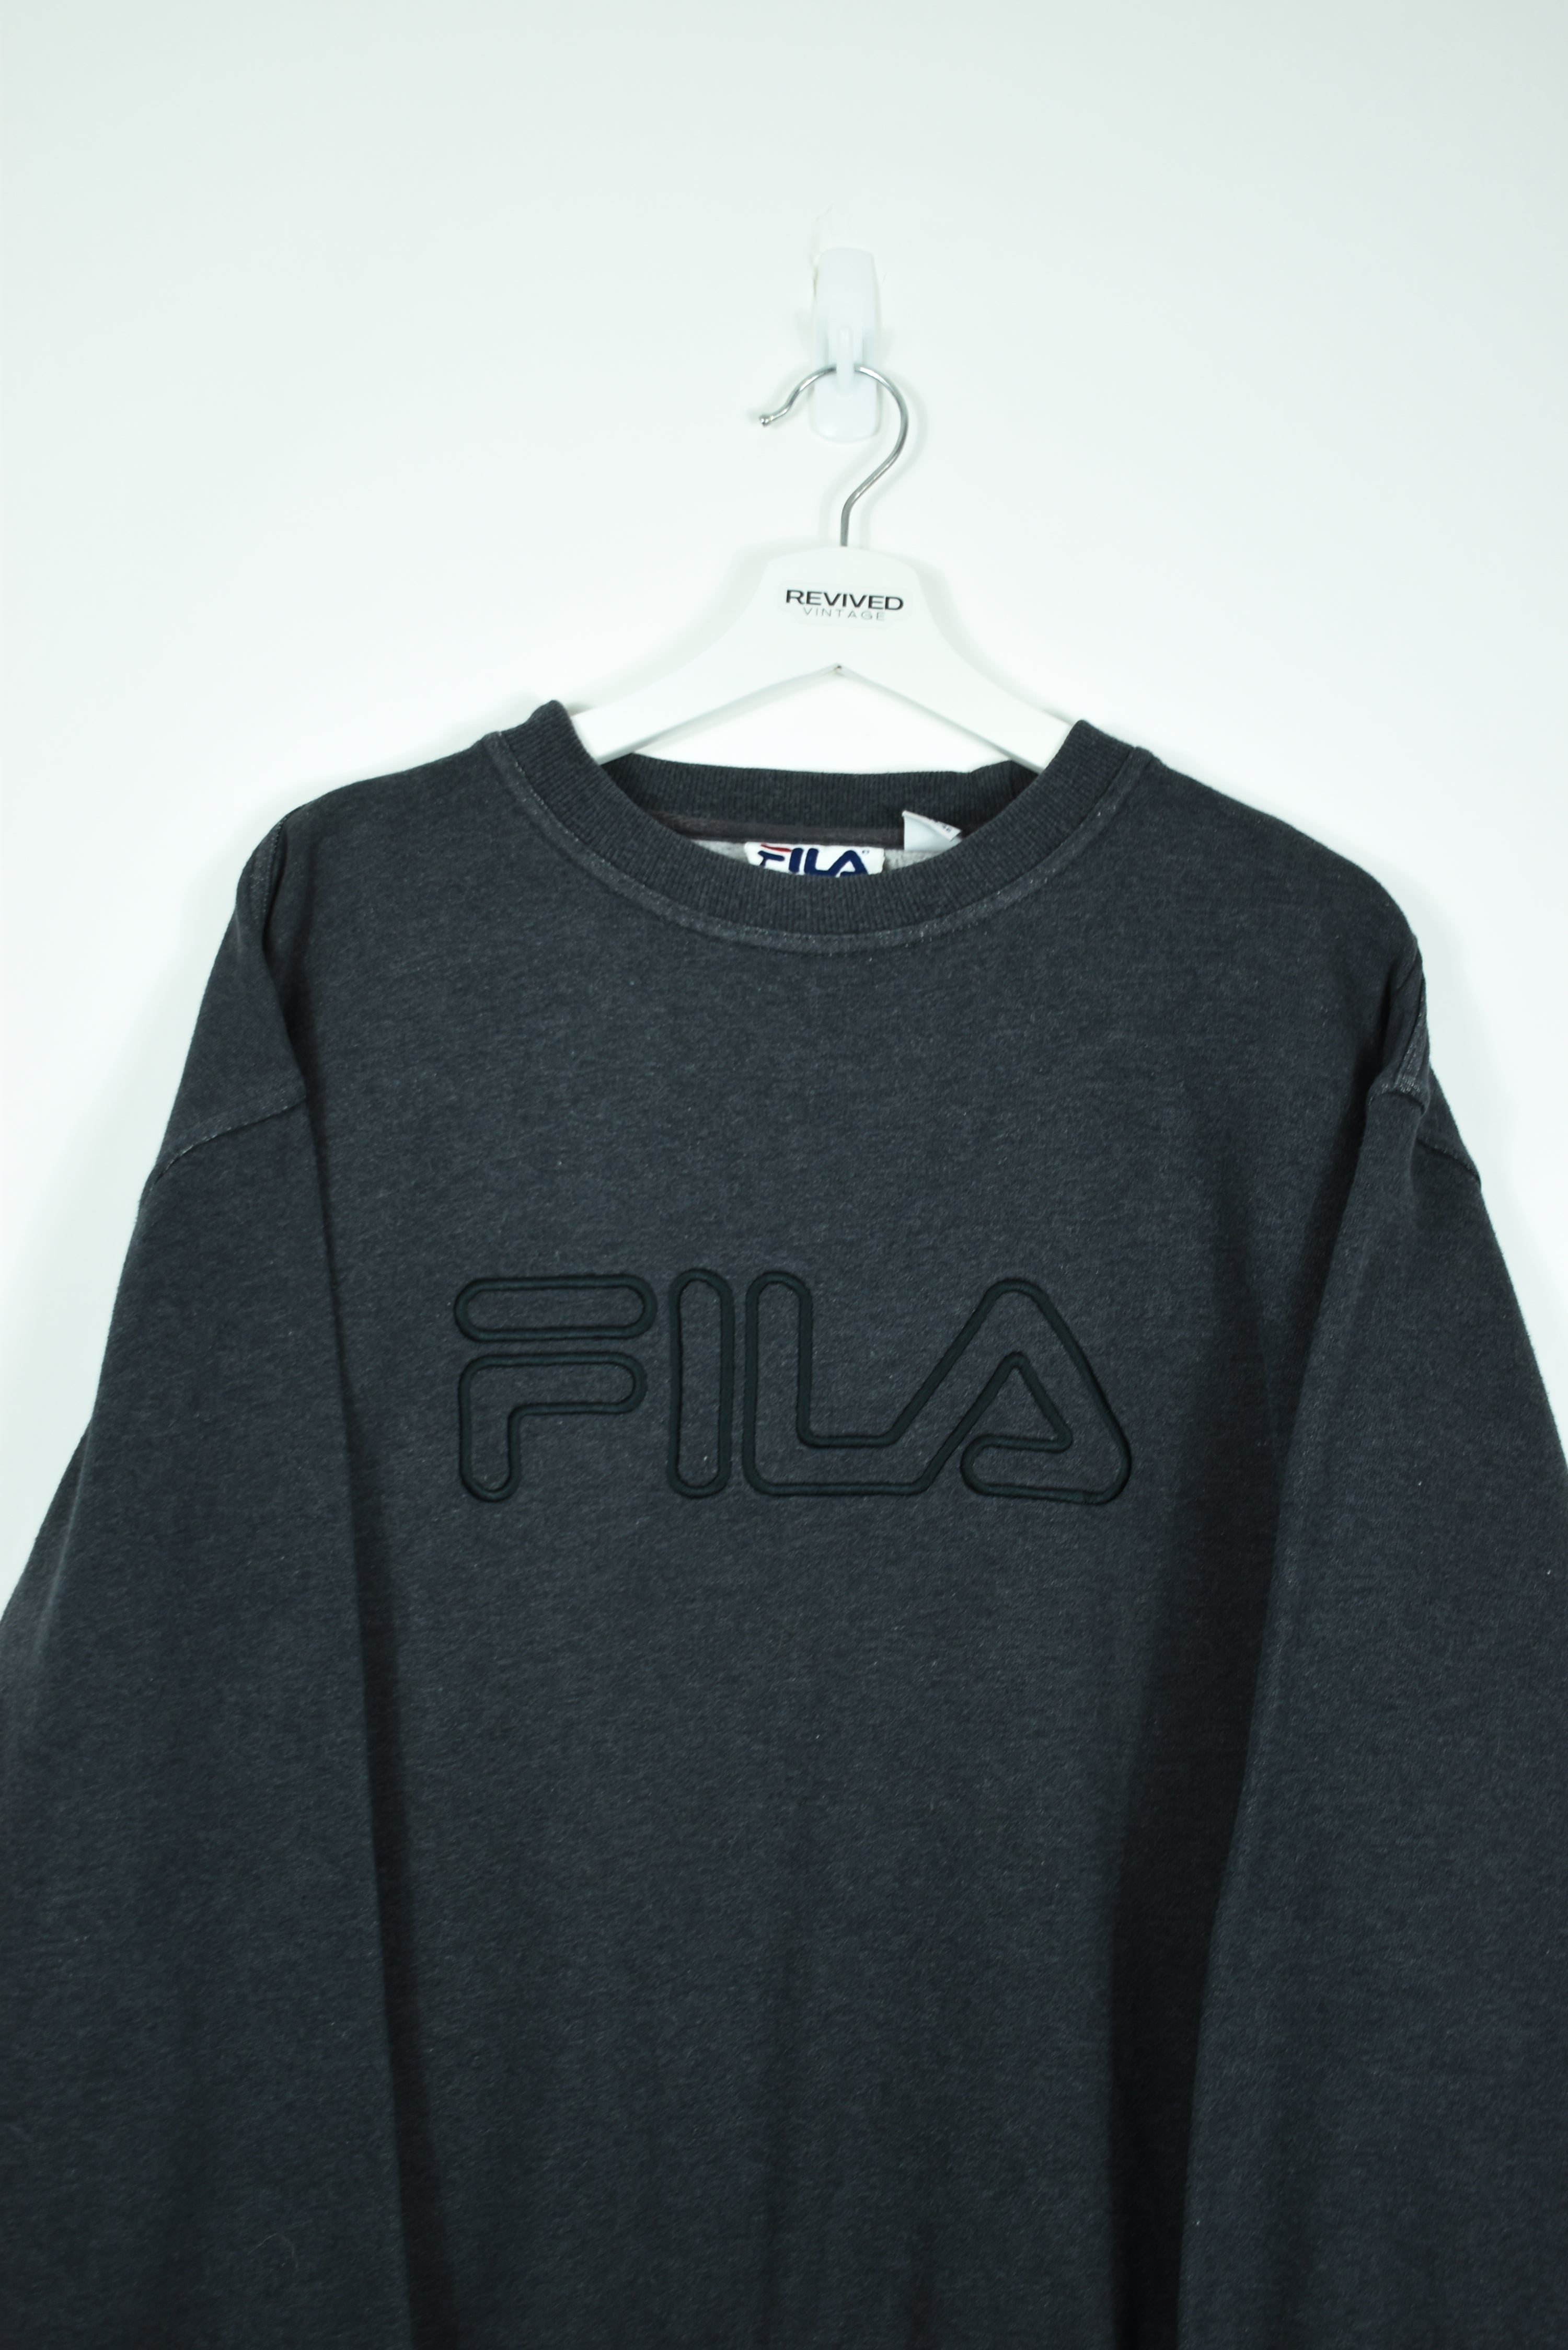 Vintage Fila Embroidery Sweatshirt Dark Grey Large